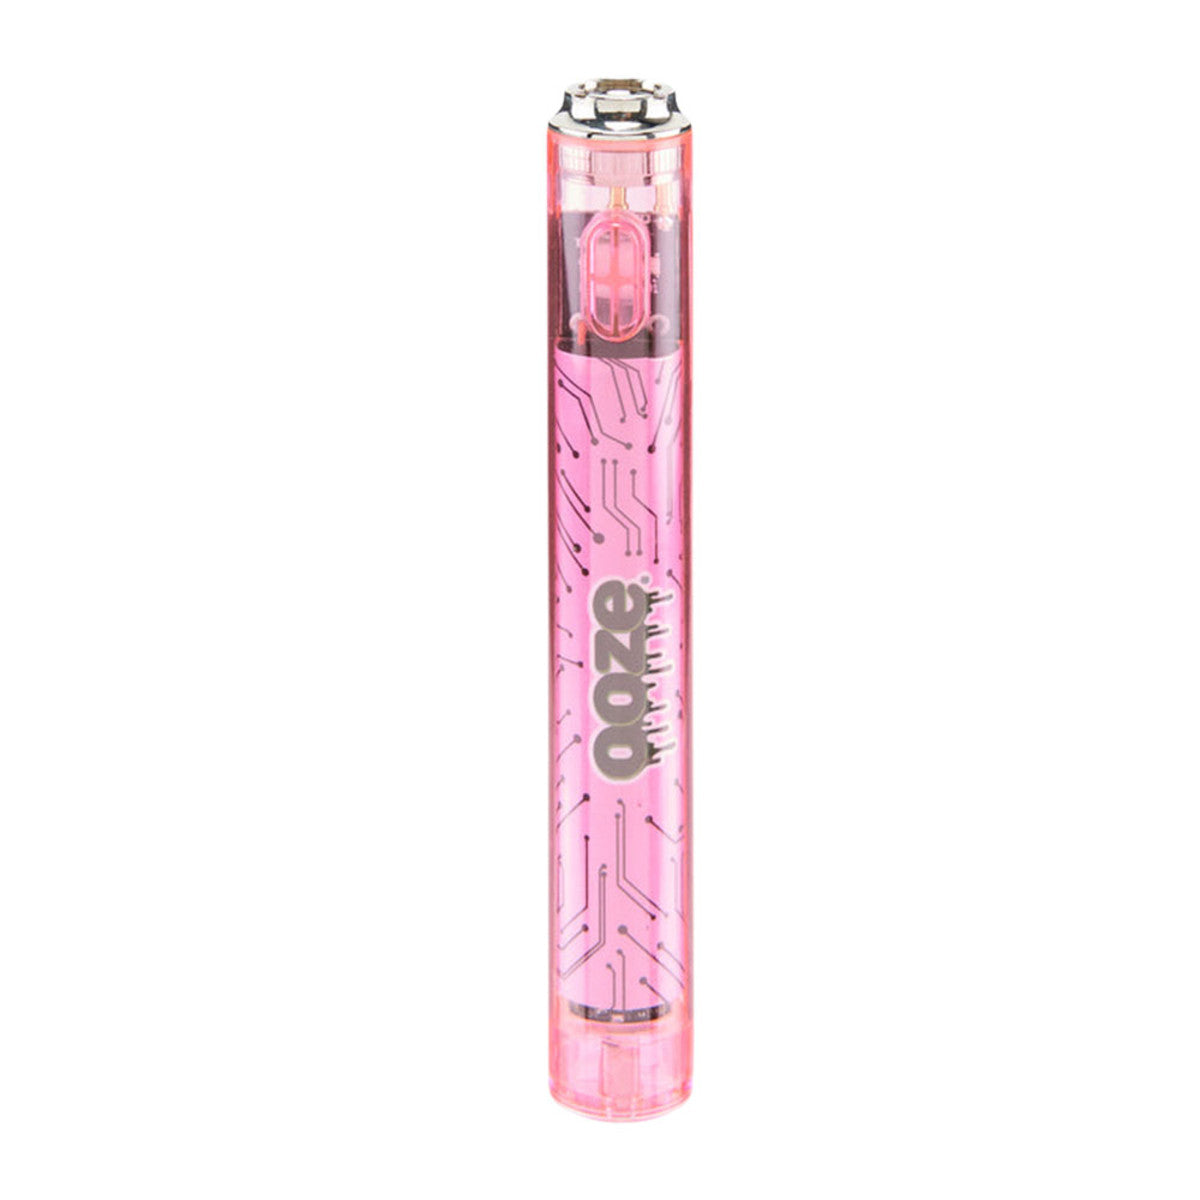 Ooze Slim Clear Series 510 Vape Cartridge Battery Atomic Pink